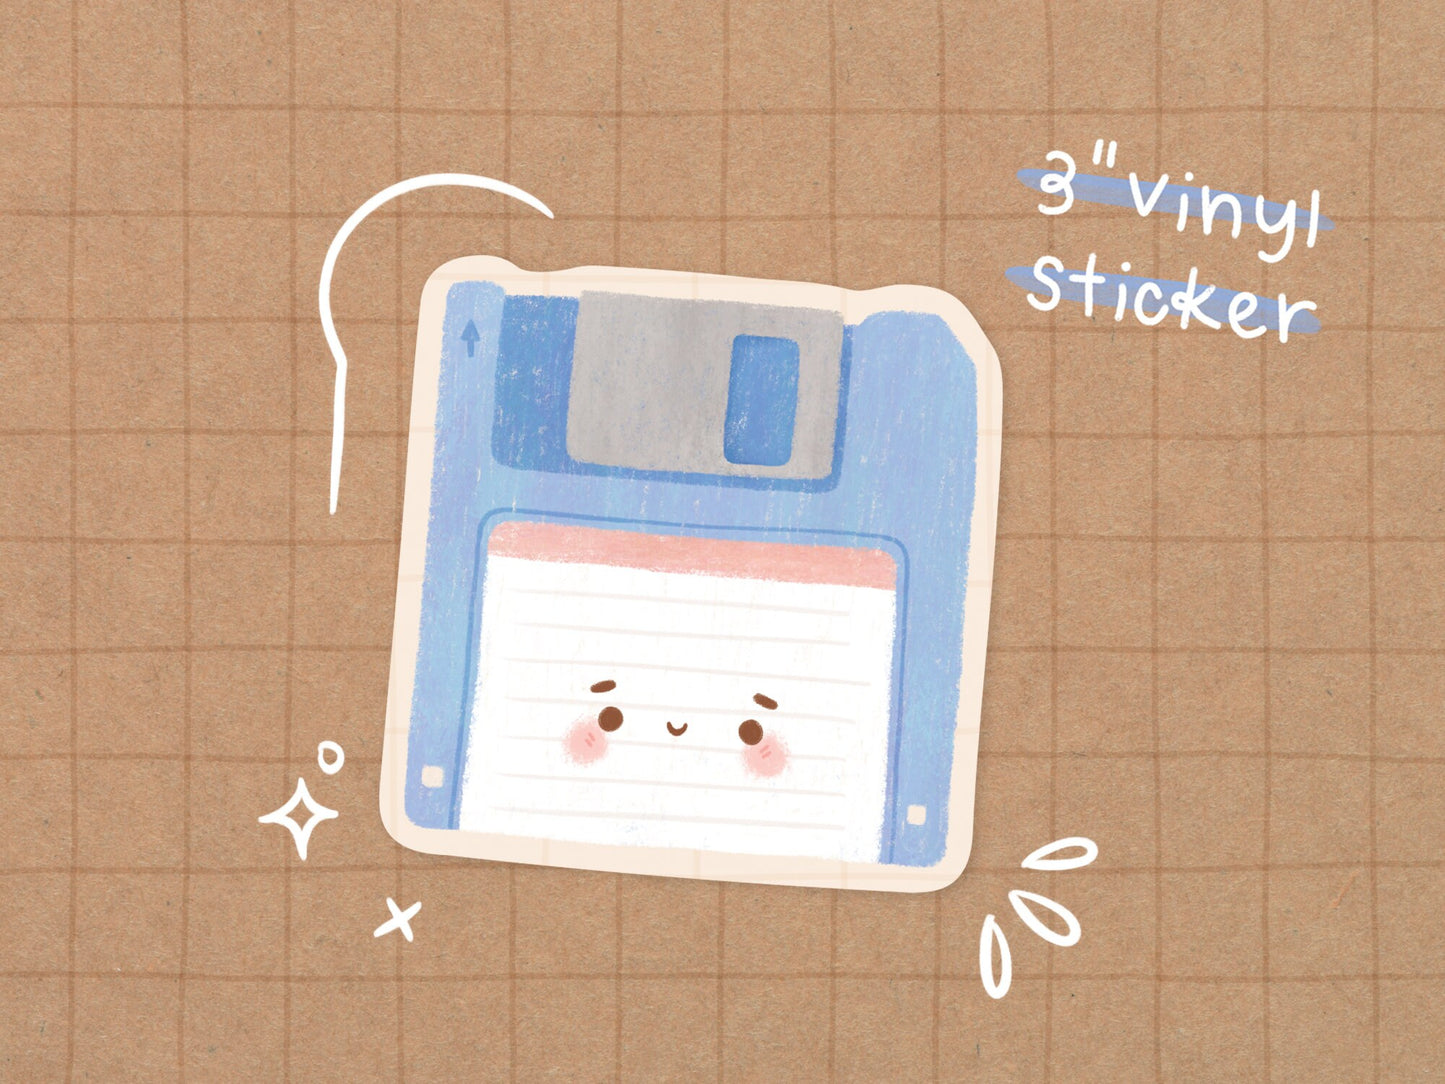 Floppy Disk Vinyl Sticker